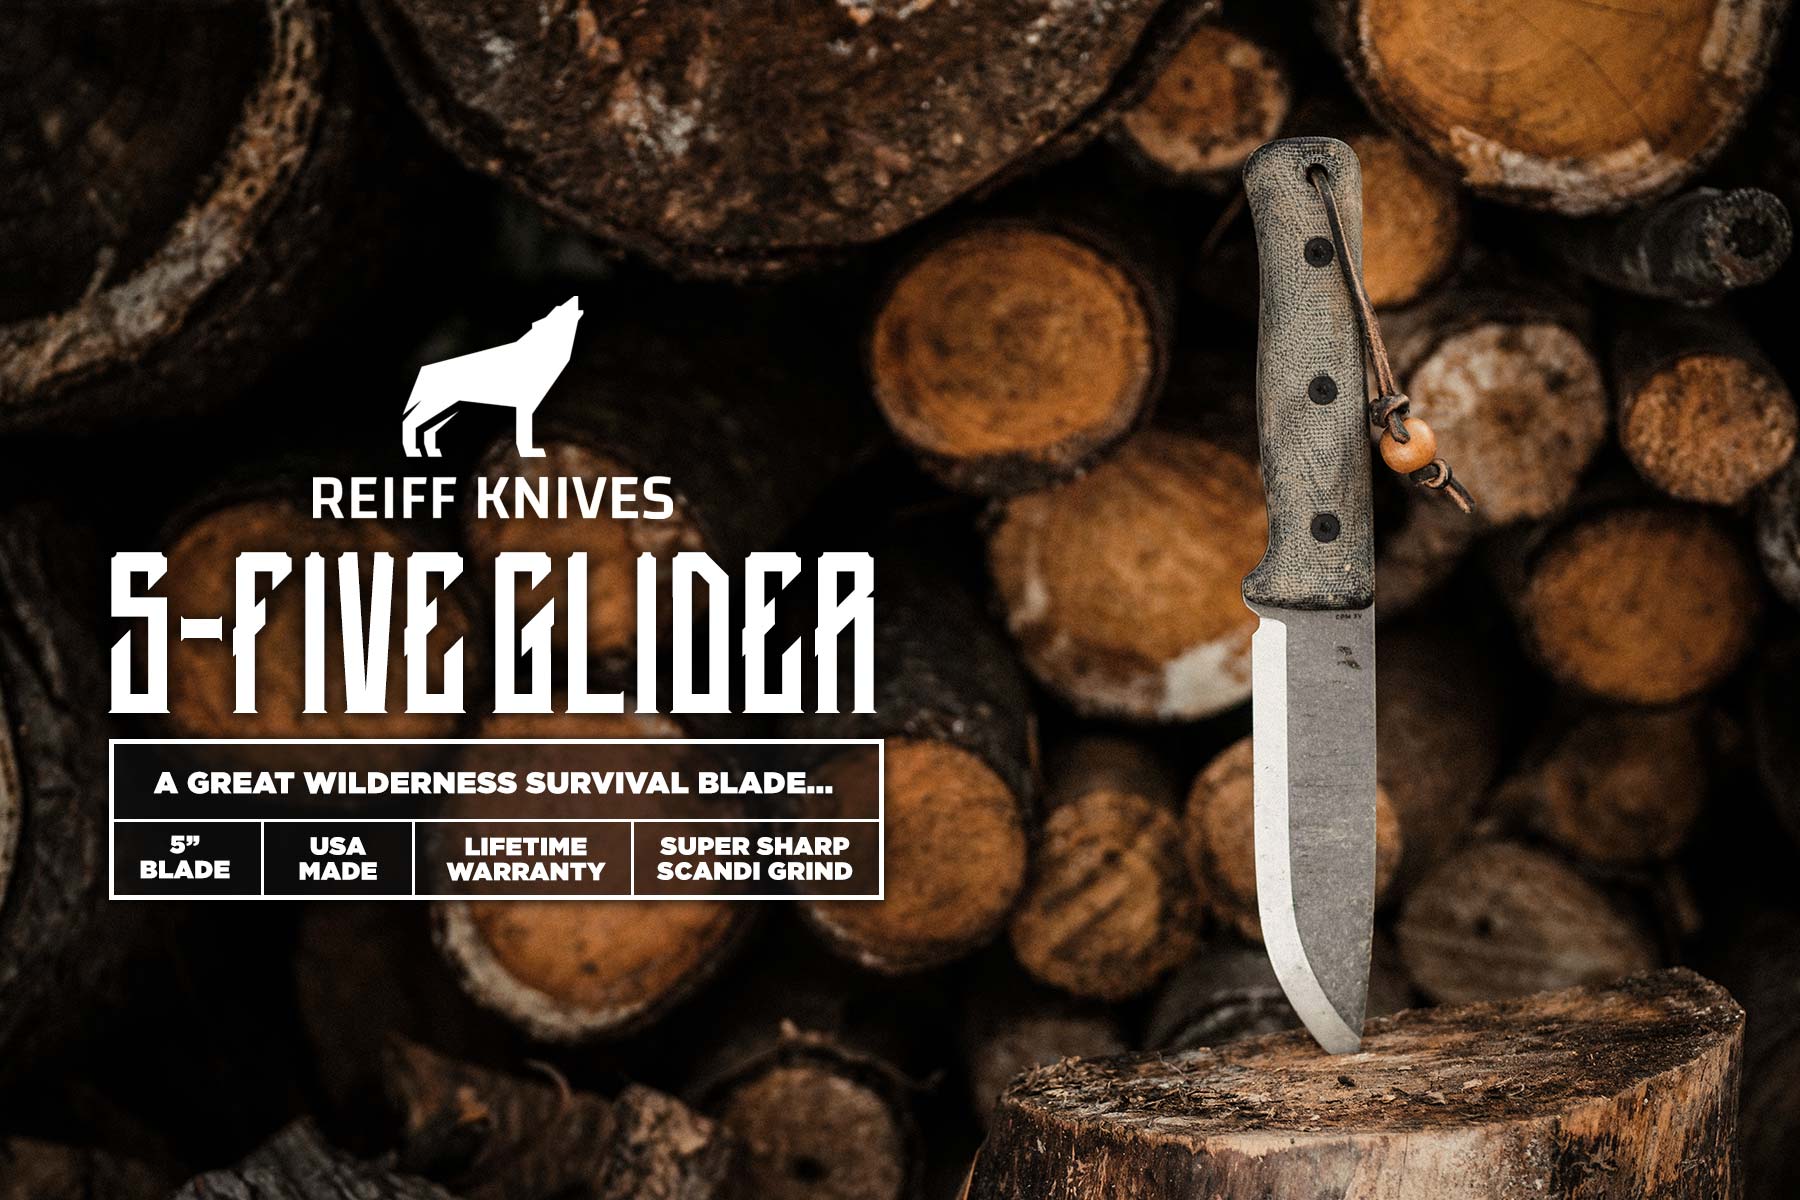 Reiff S5 Glider Bushcraft Knife Review